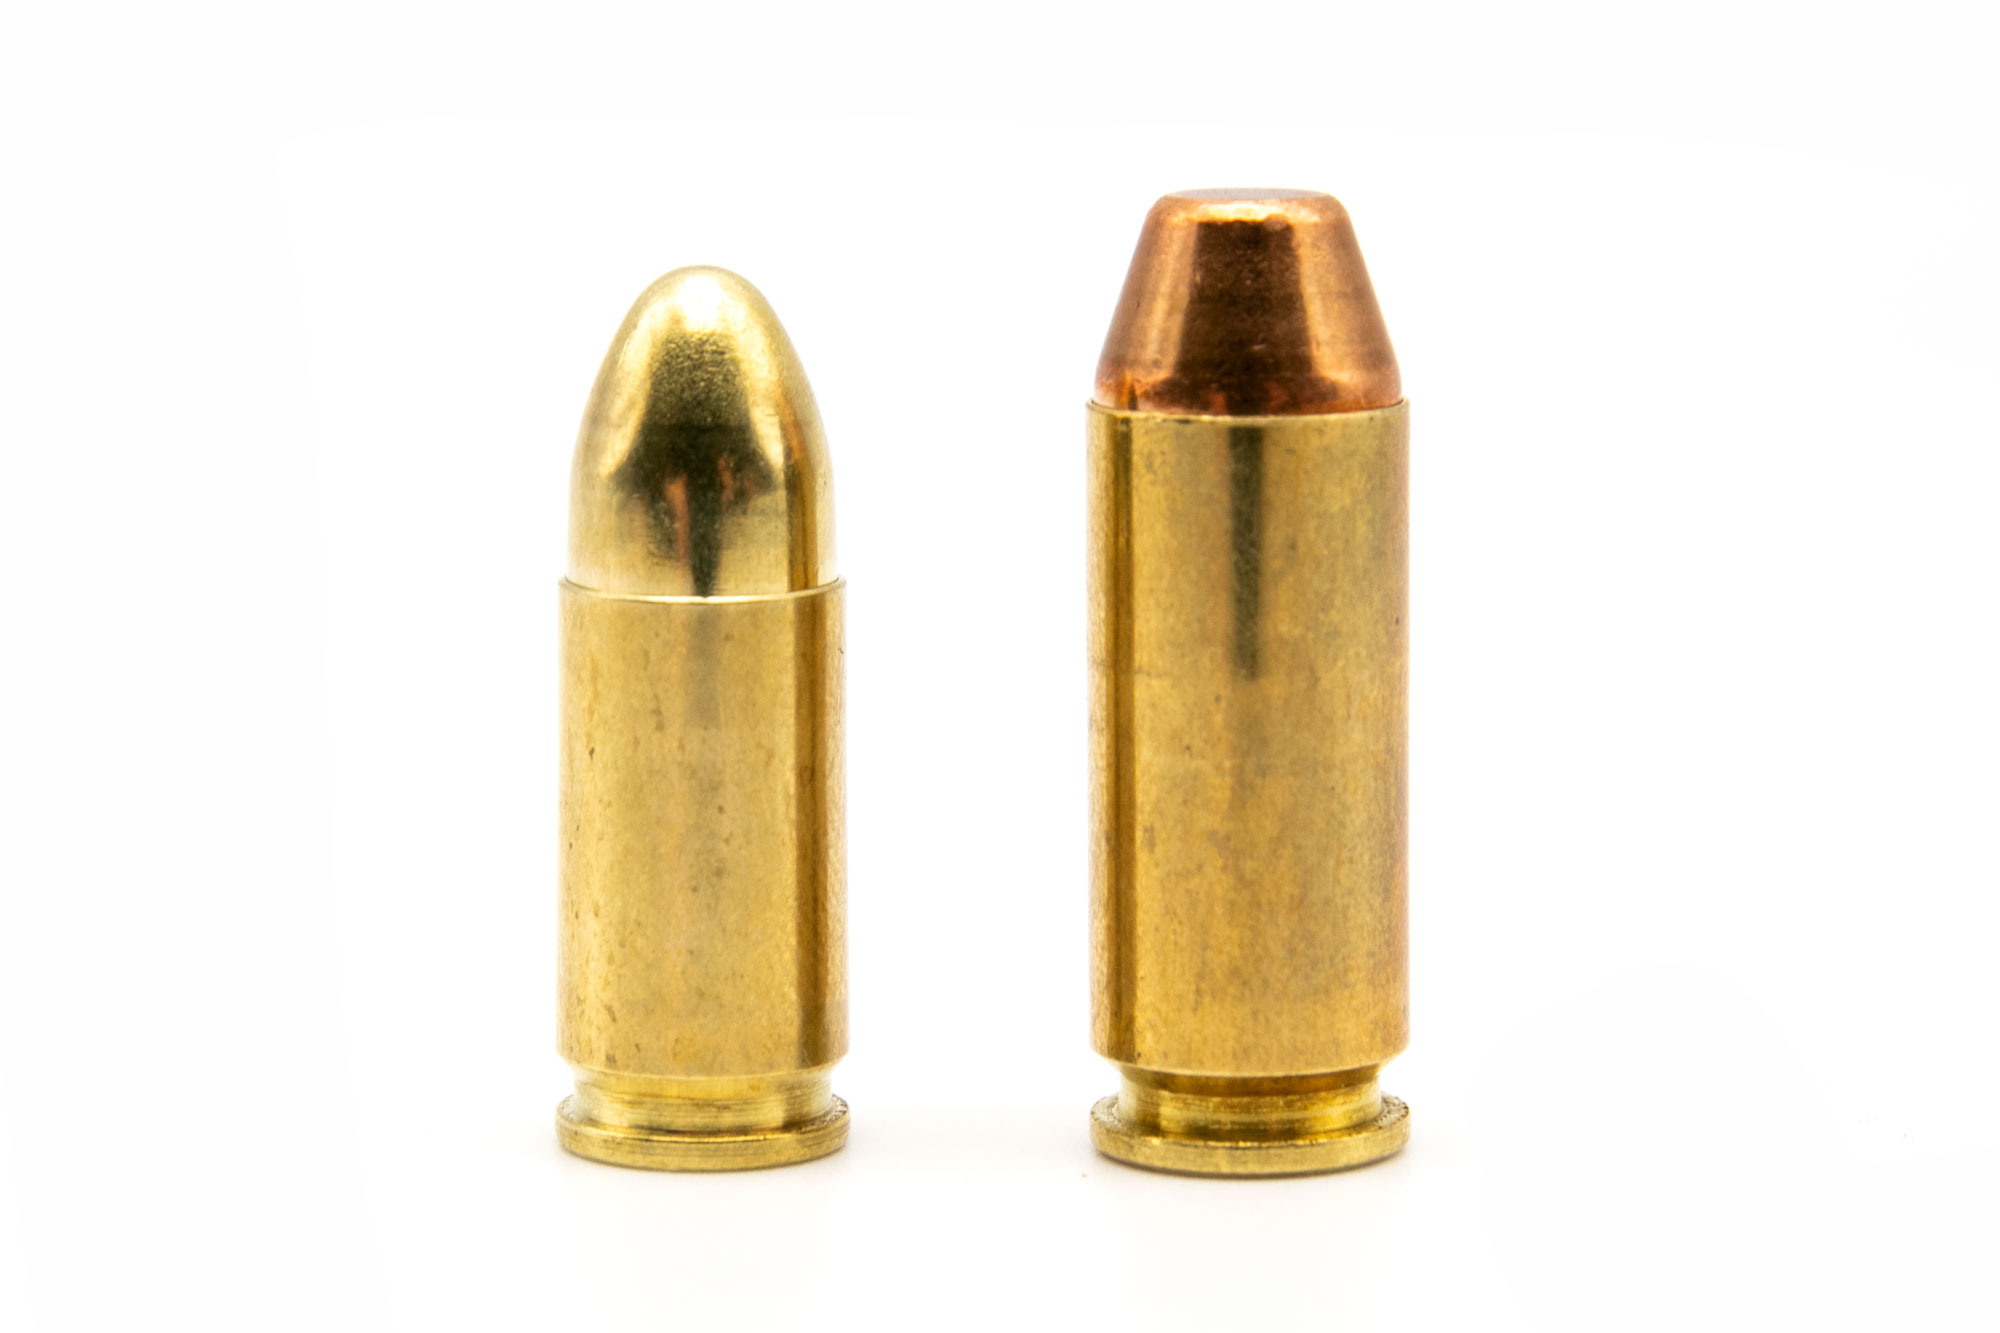 9mm bullet next to 10mm bullet